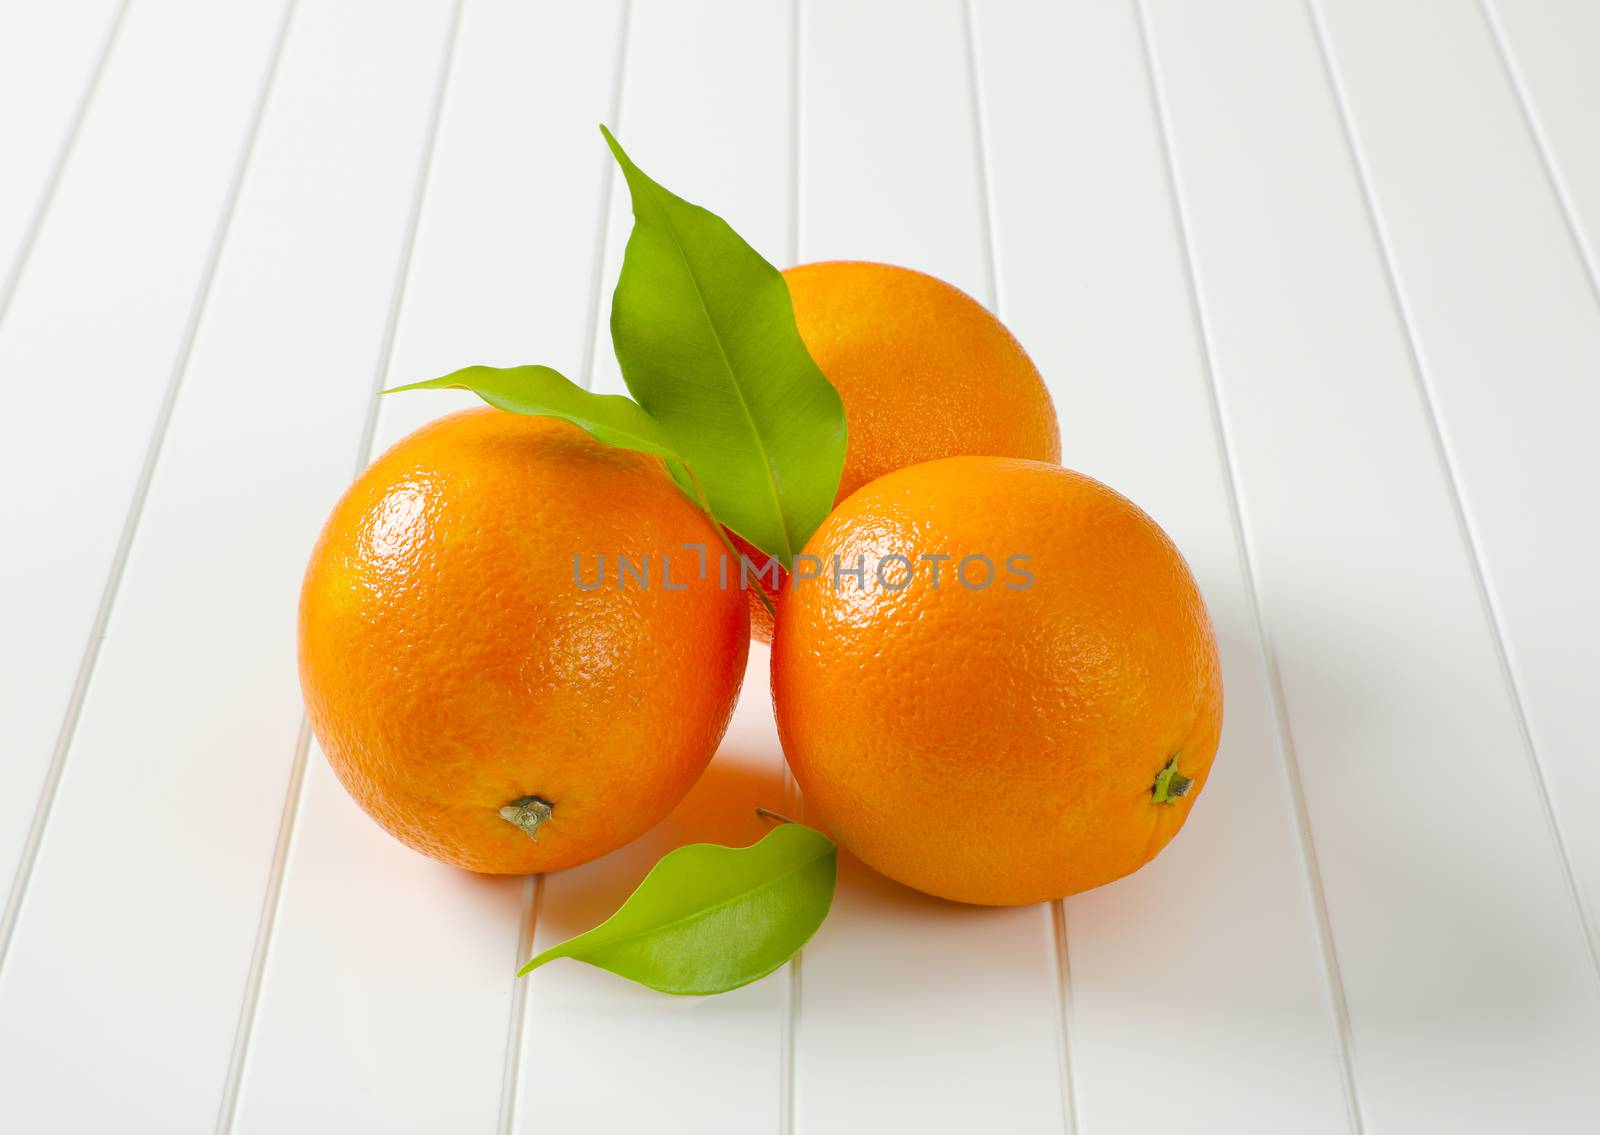 Three whole ripe oranges and leaves